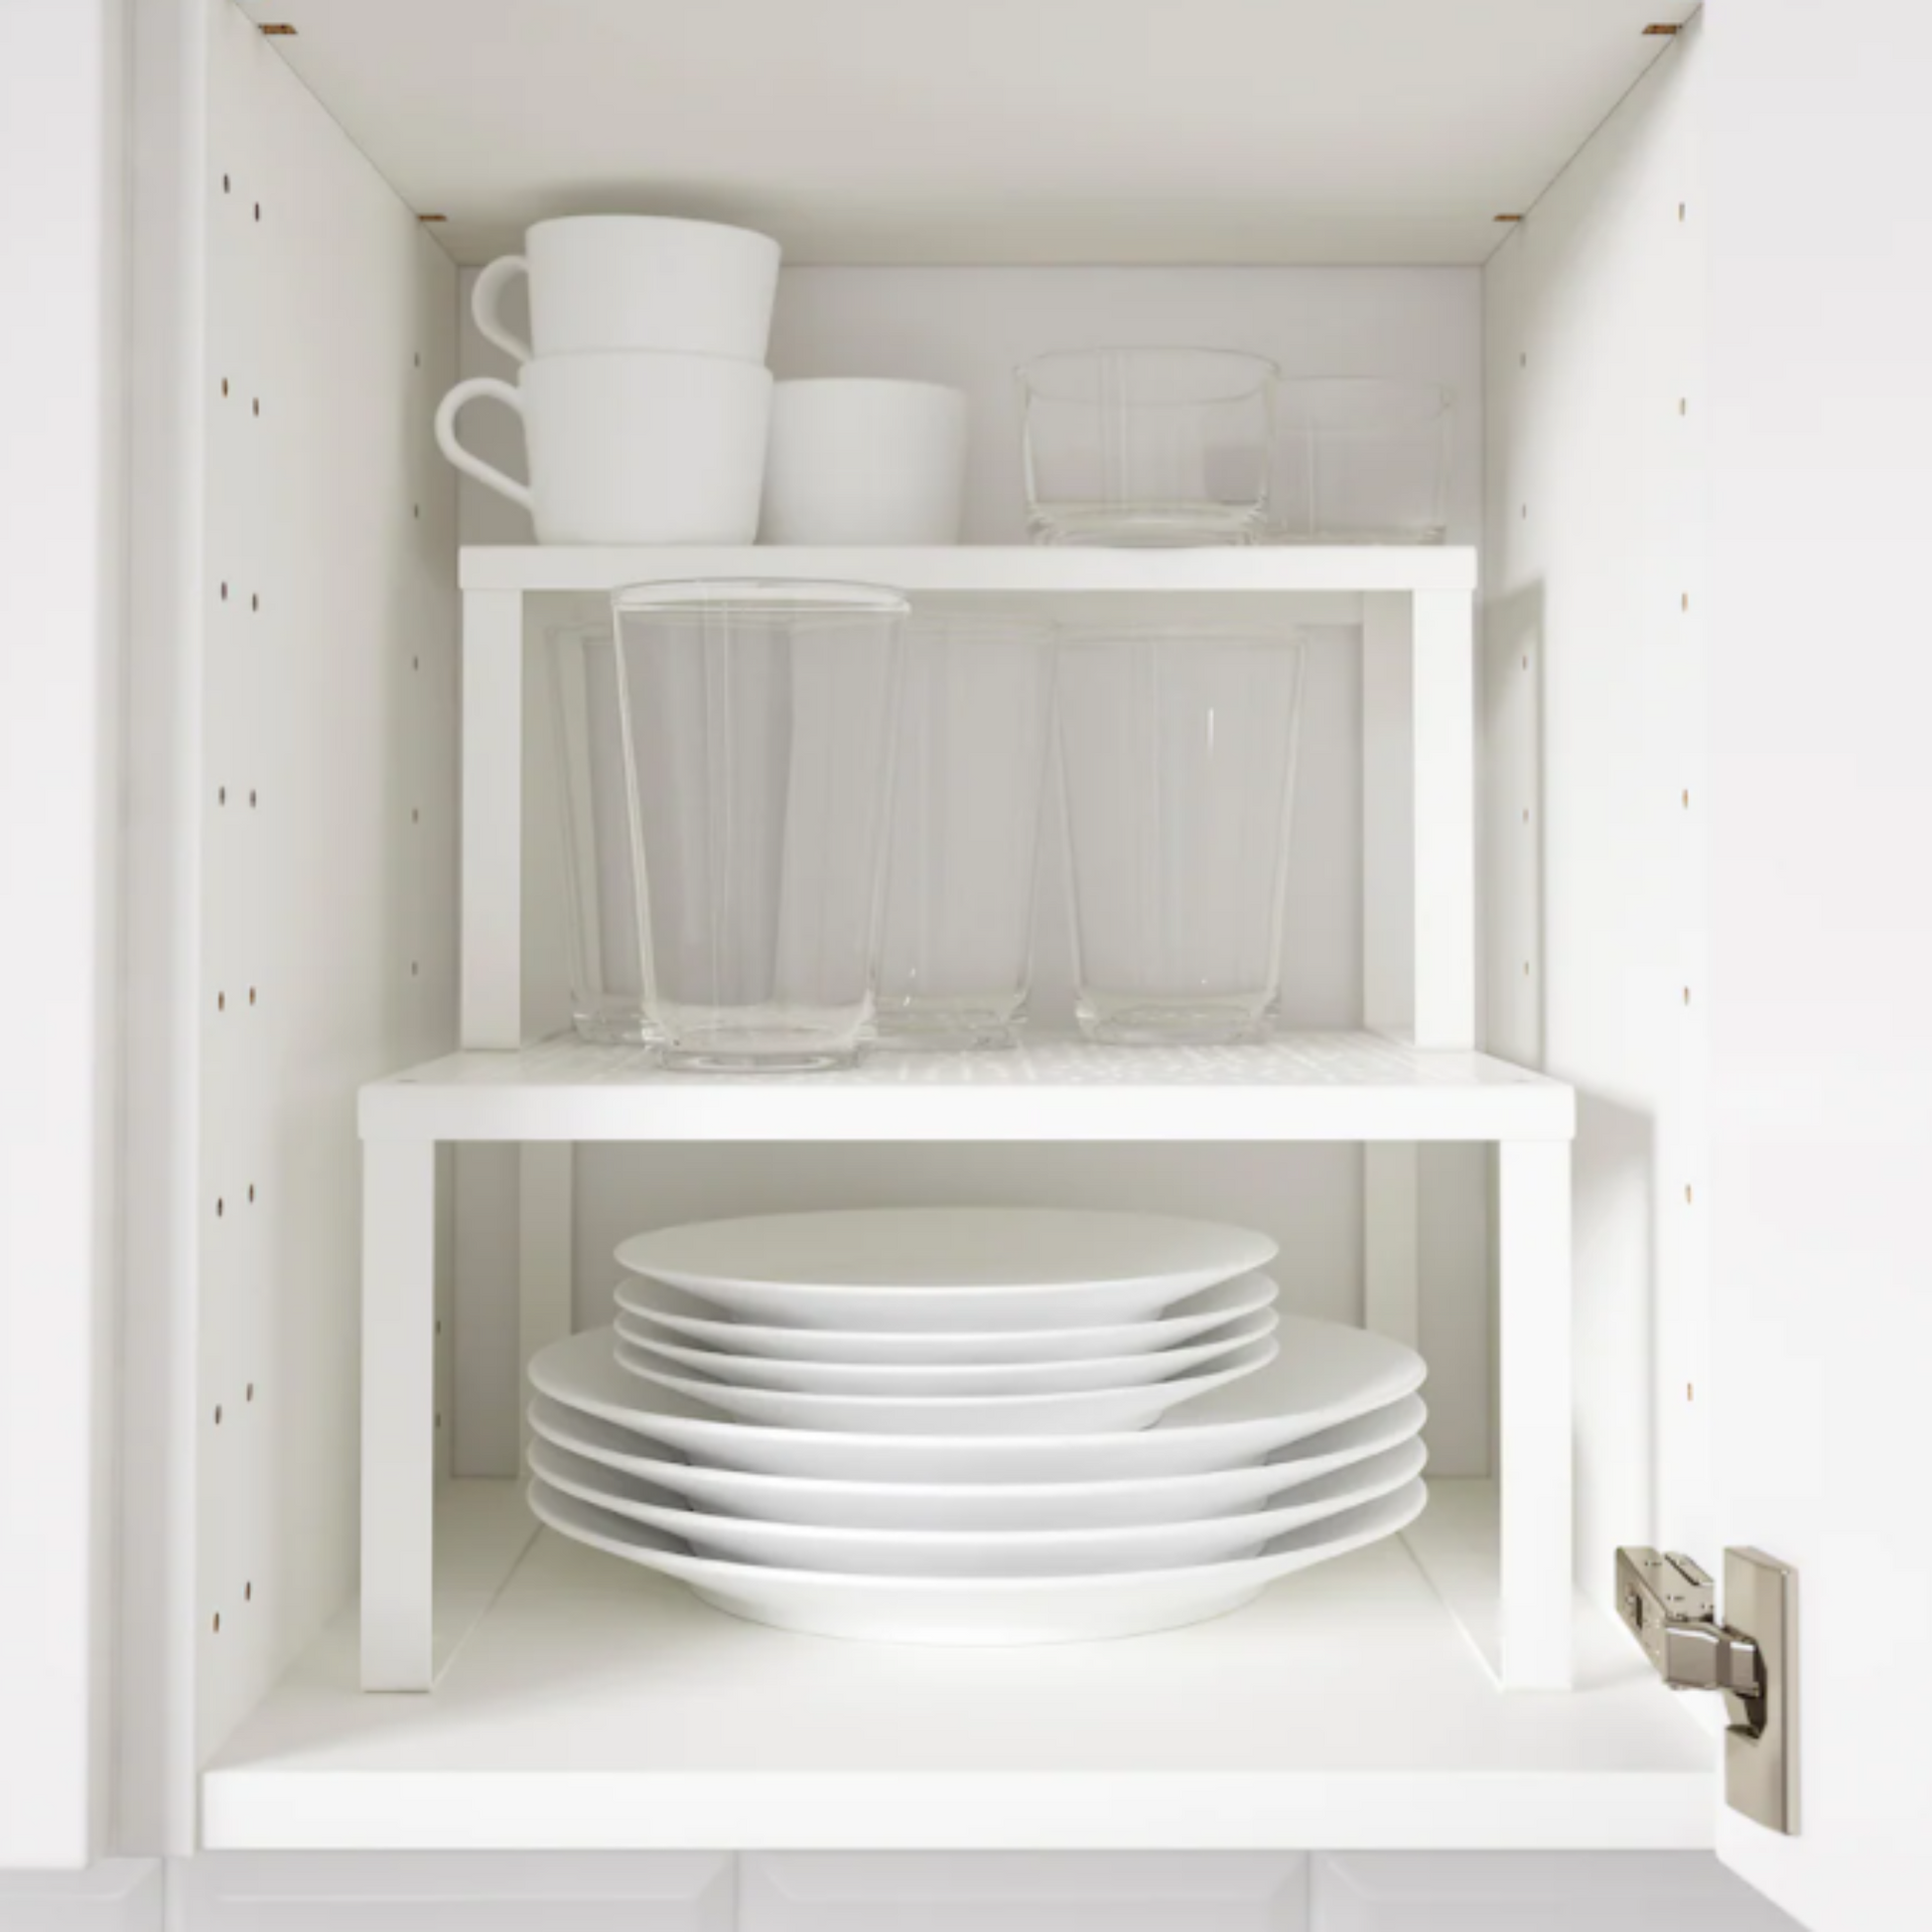 IKEA Variera Shelf Insert, White (4572850716737)